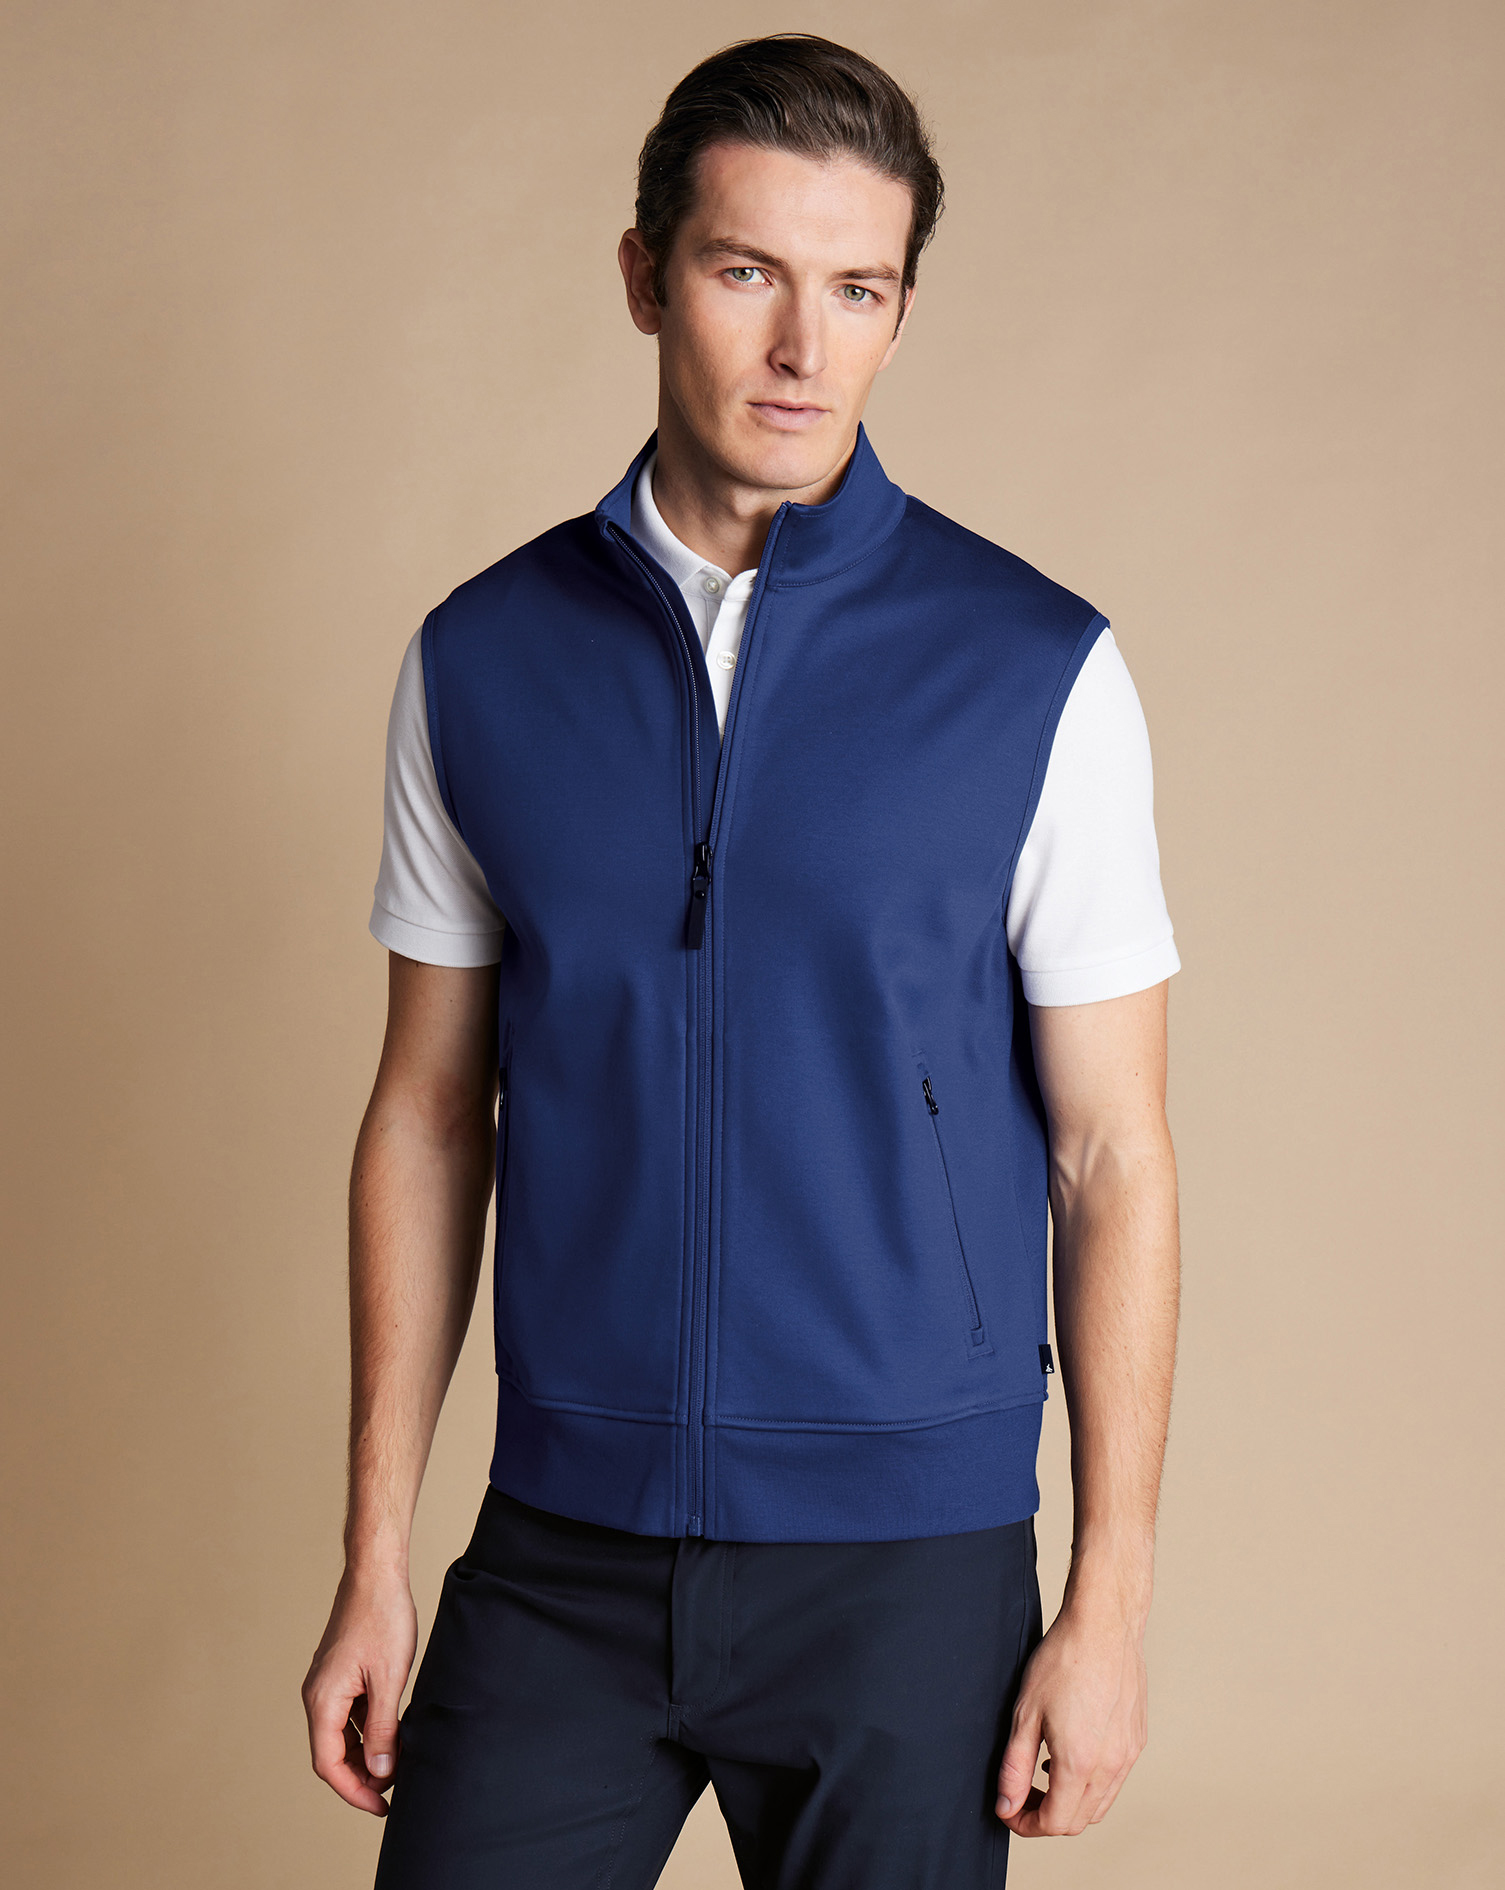 Men's Charles Tyrwhitt Performance Funnel Neck Gilet - Royal Blue Sleeveless Jacket Size XXXL Cotton